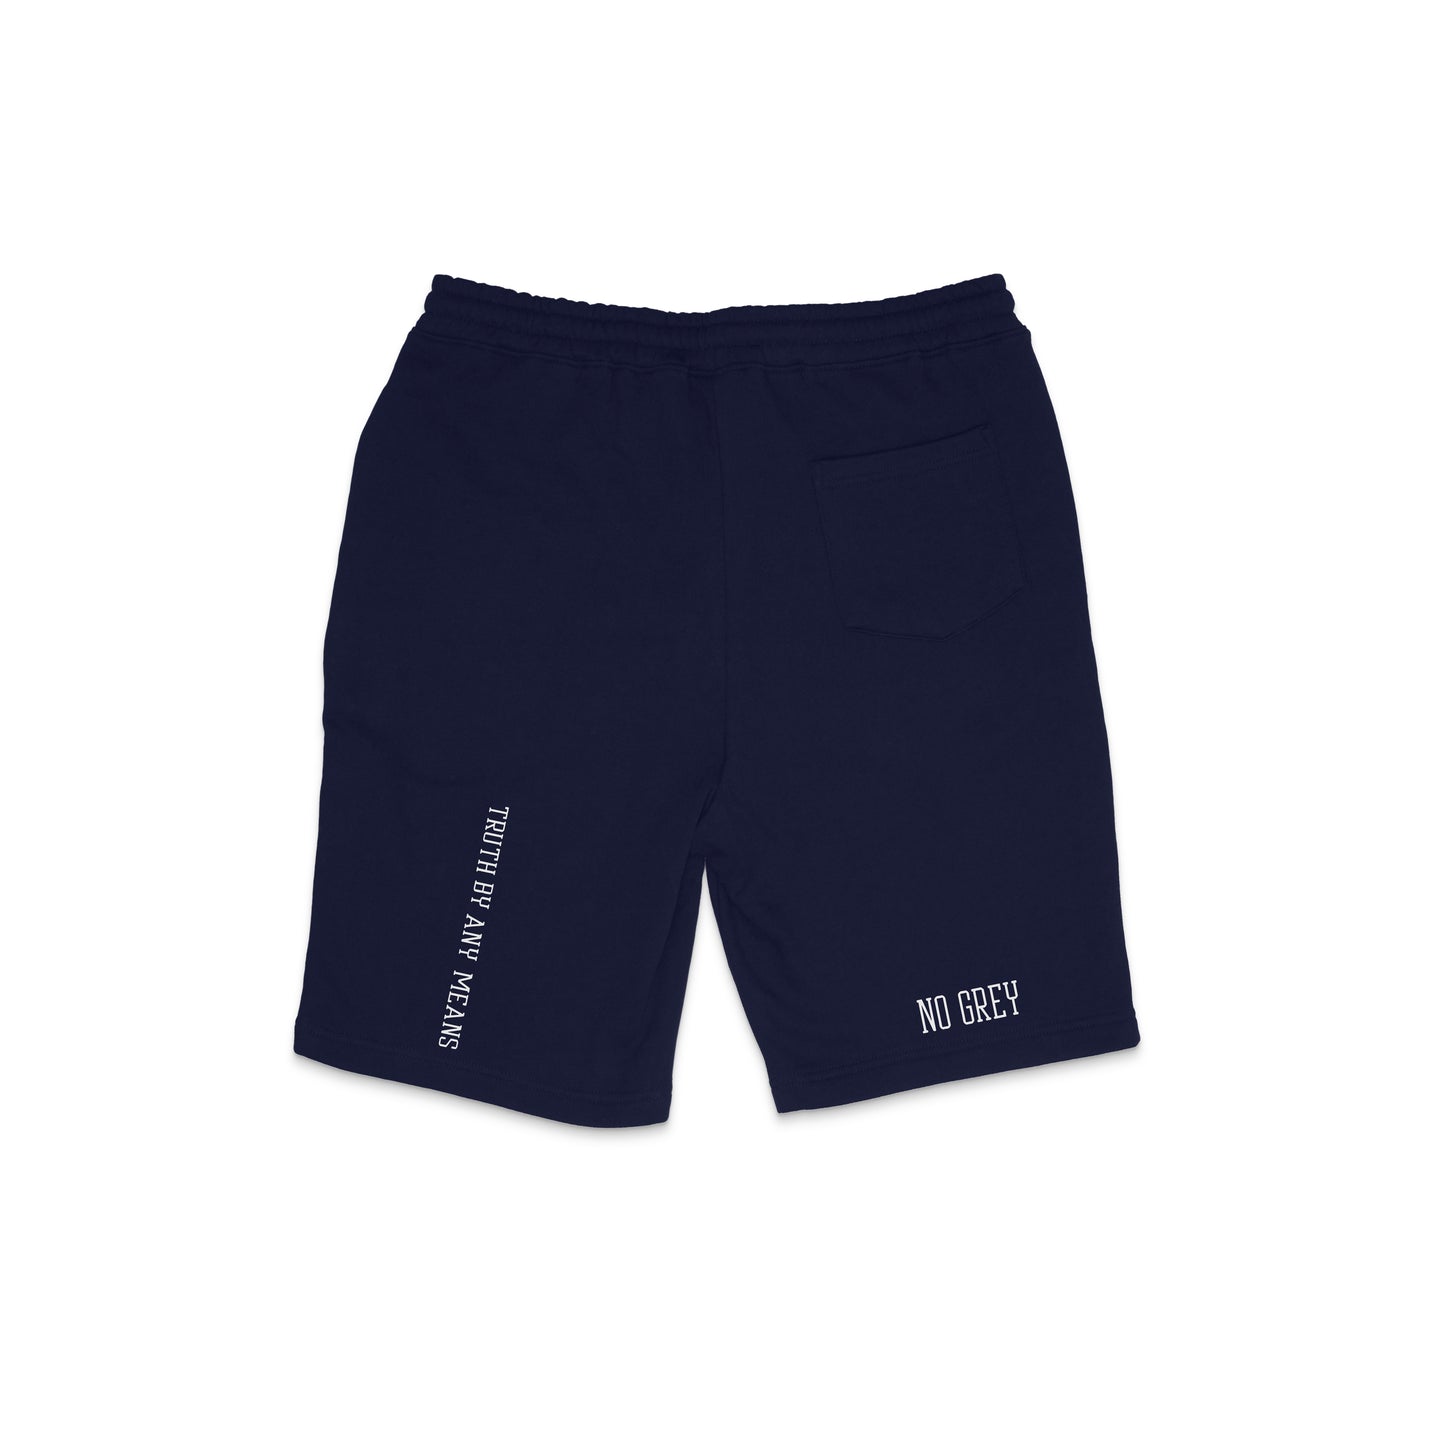 No Grey - Premium Fleece Shorts (Navy)